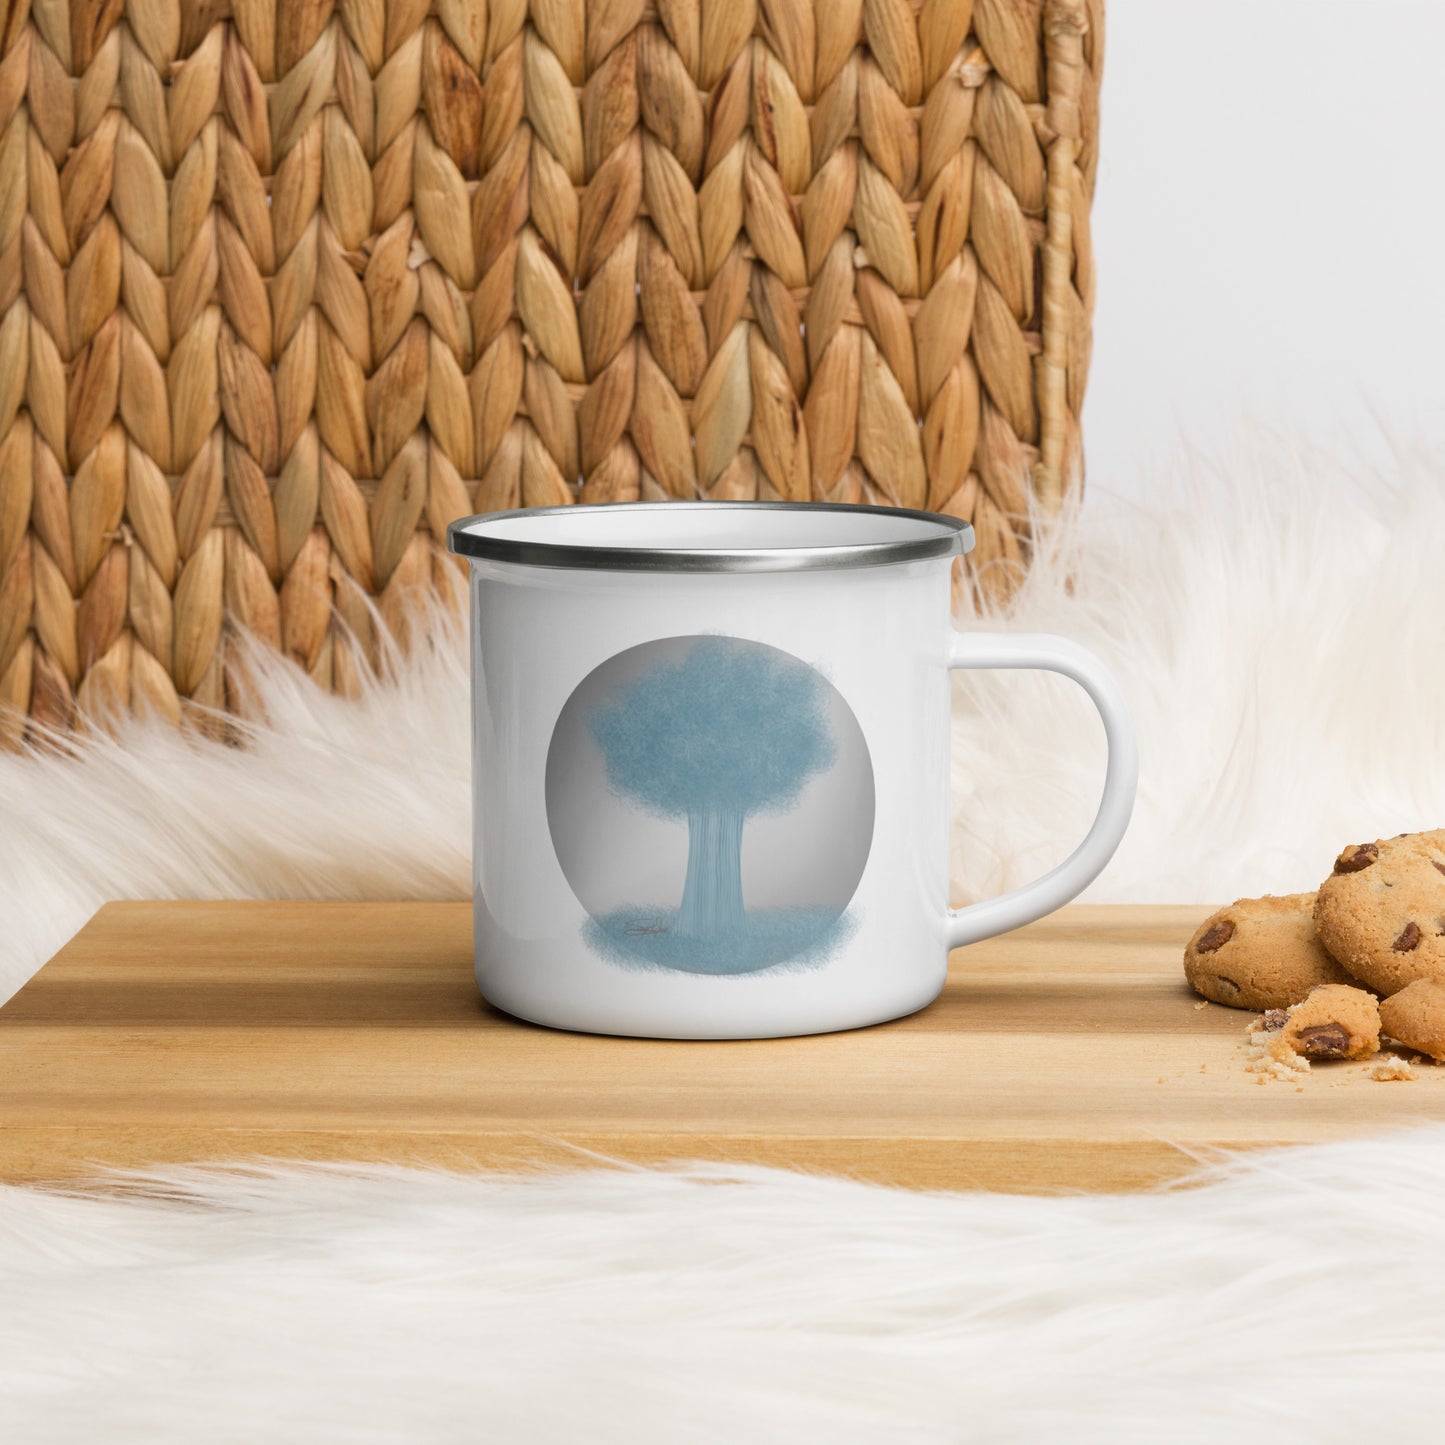 Coffee Break, Nature Pause - Enamel Mug